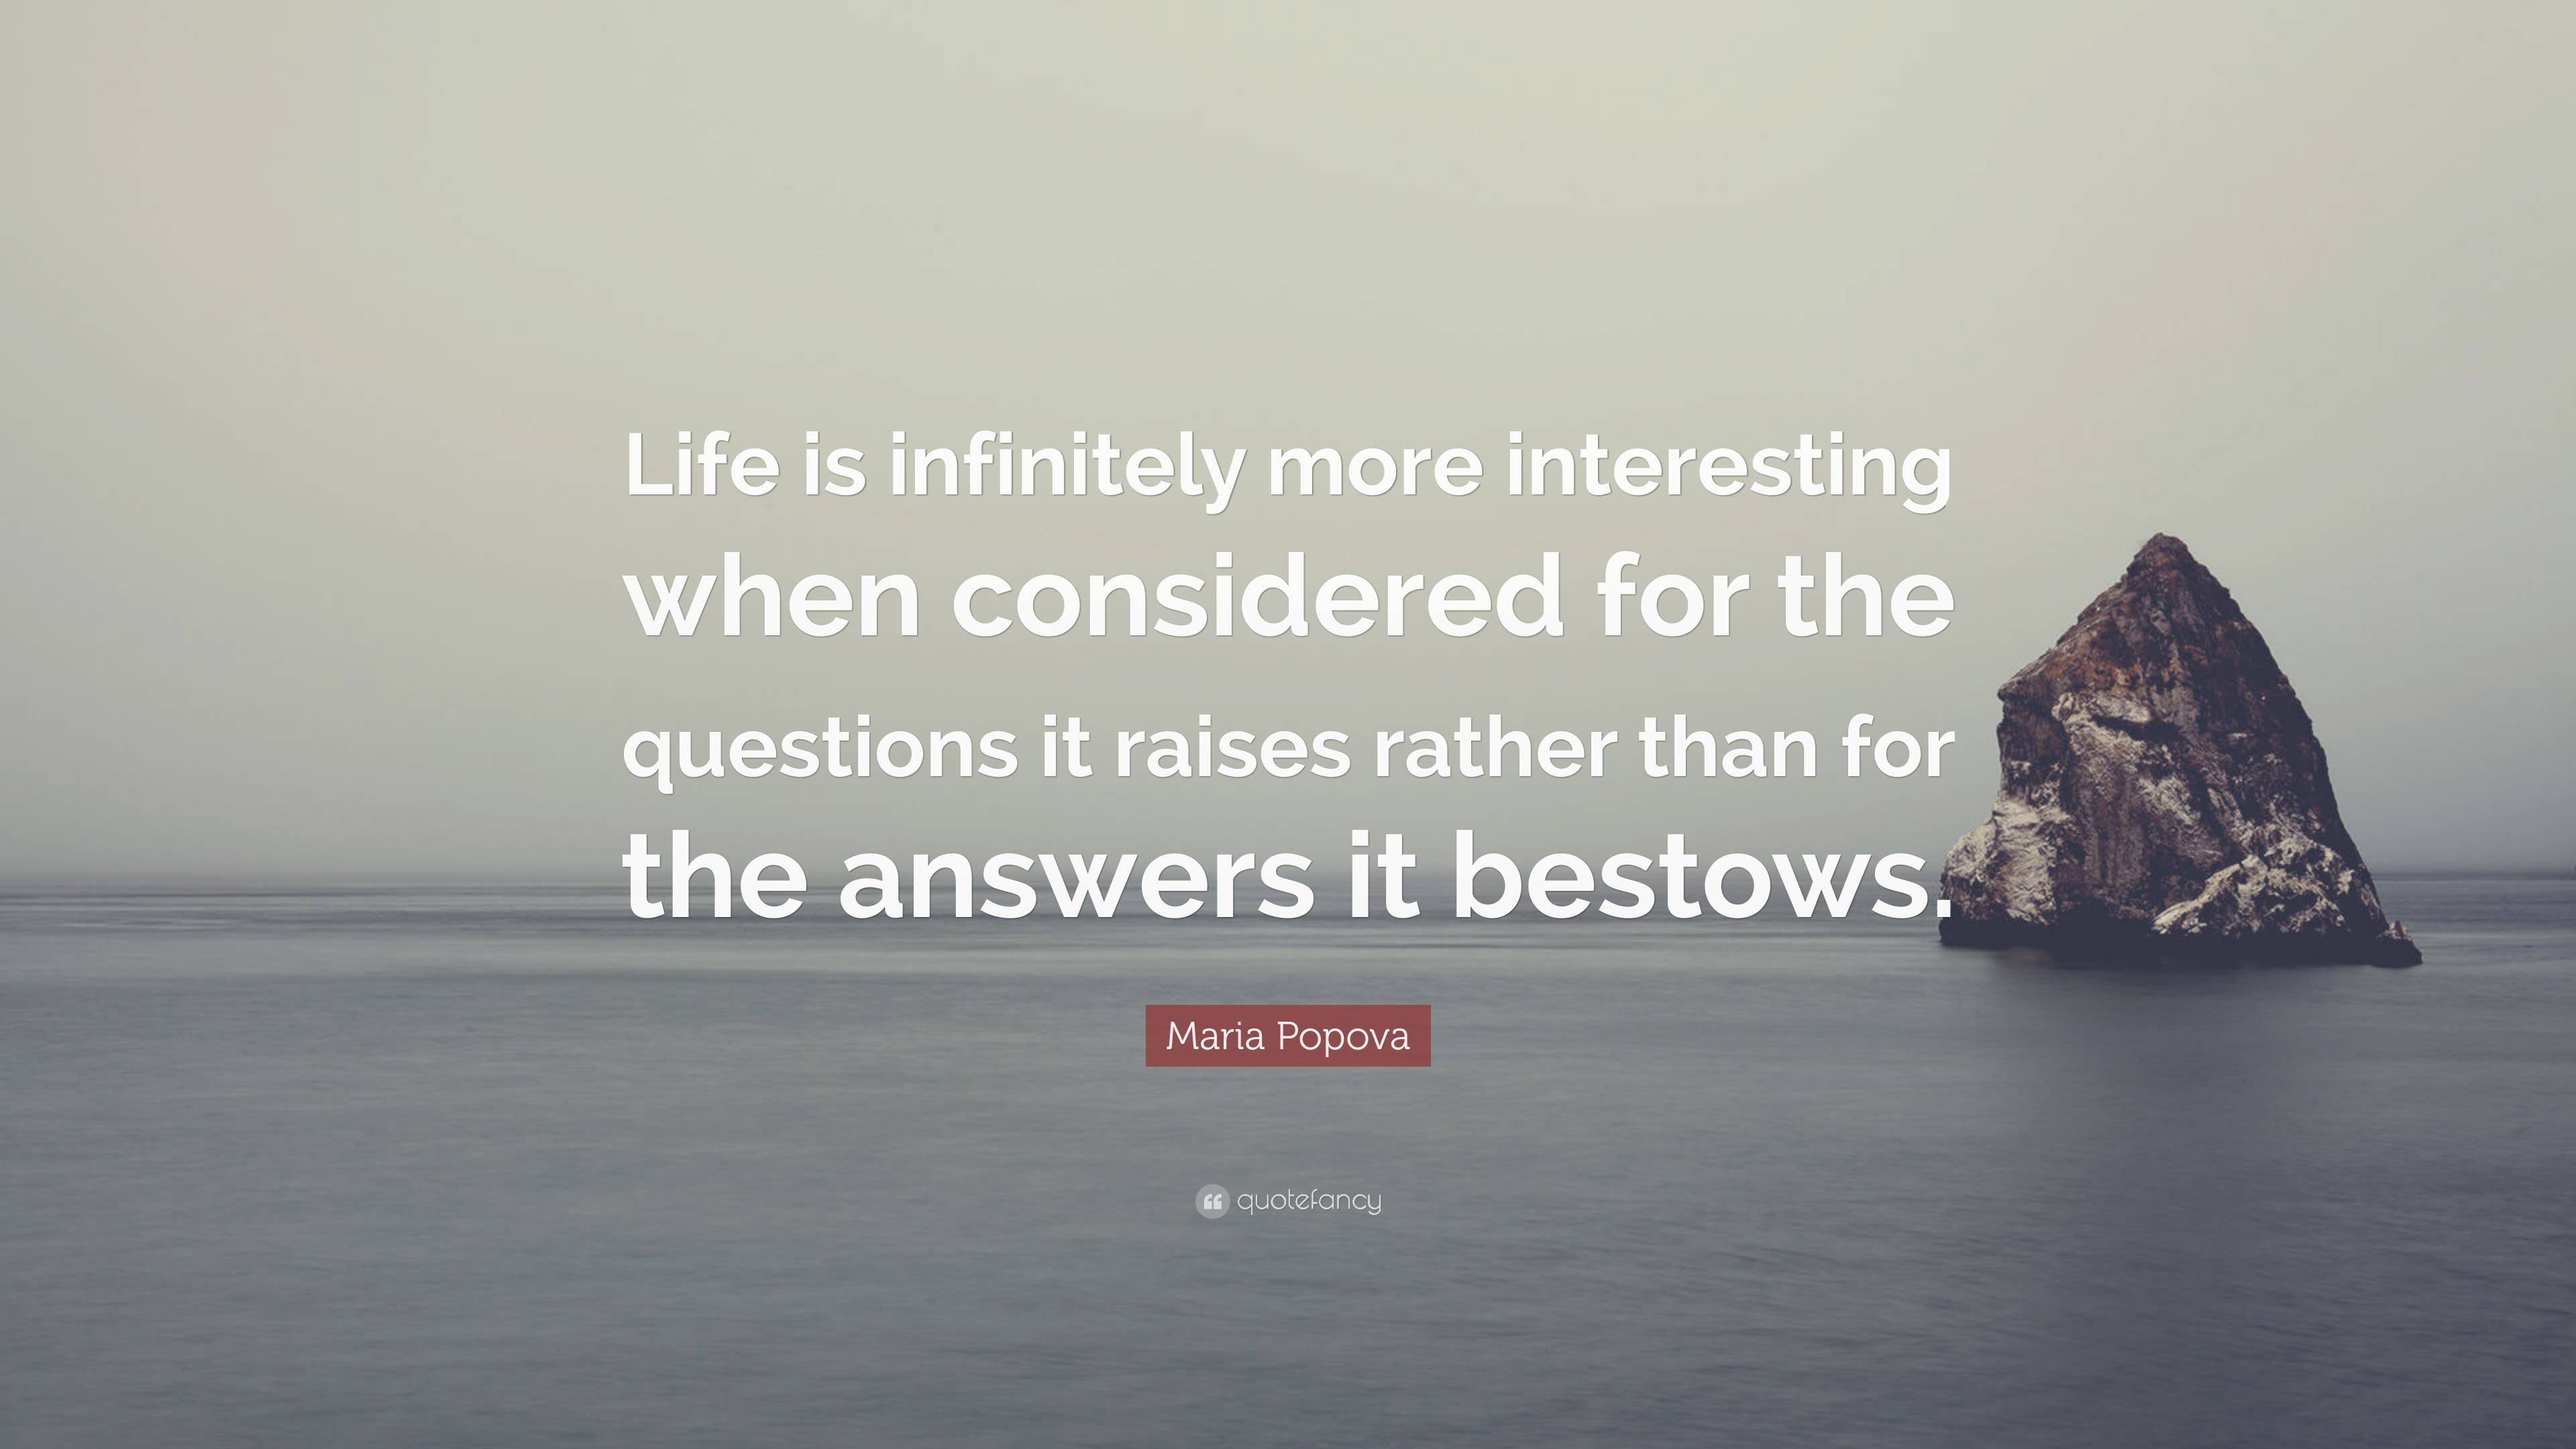 Maria Popova Quote: “Life is infinitely more interesting when ...